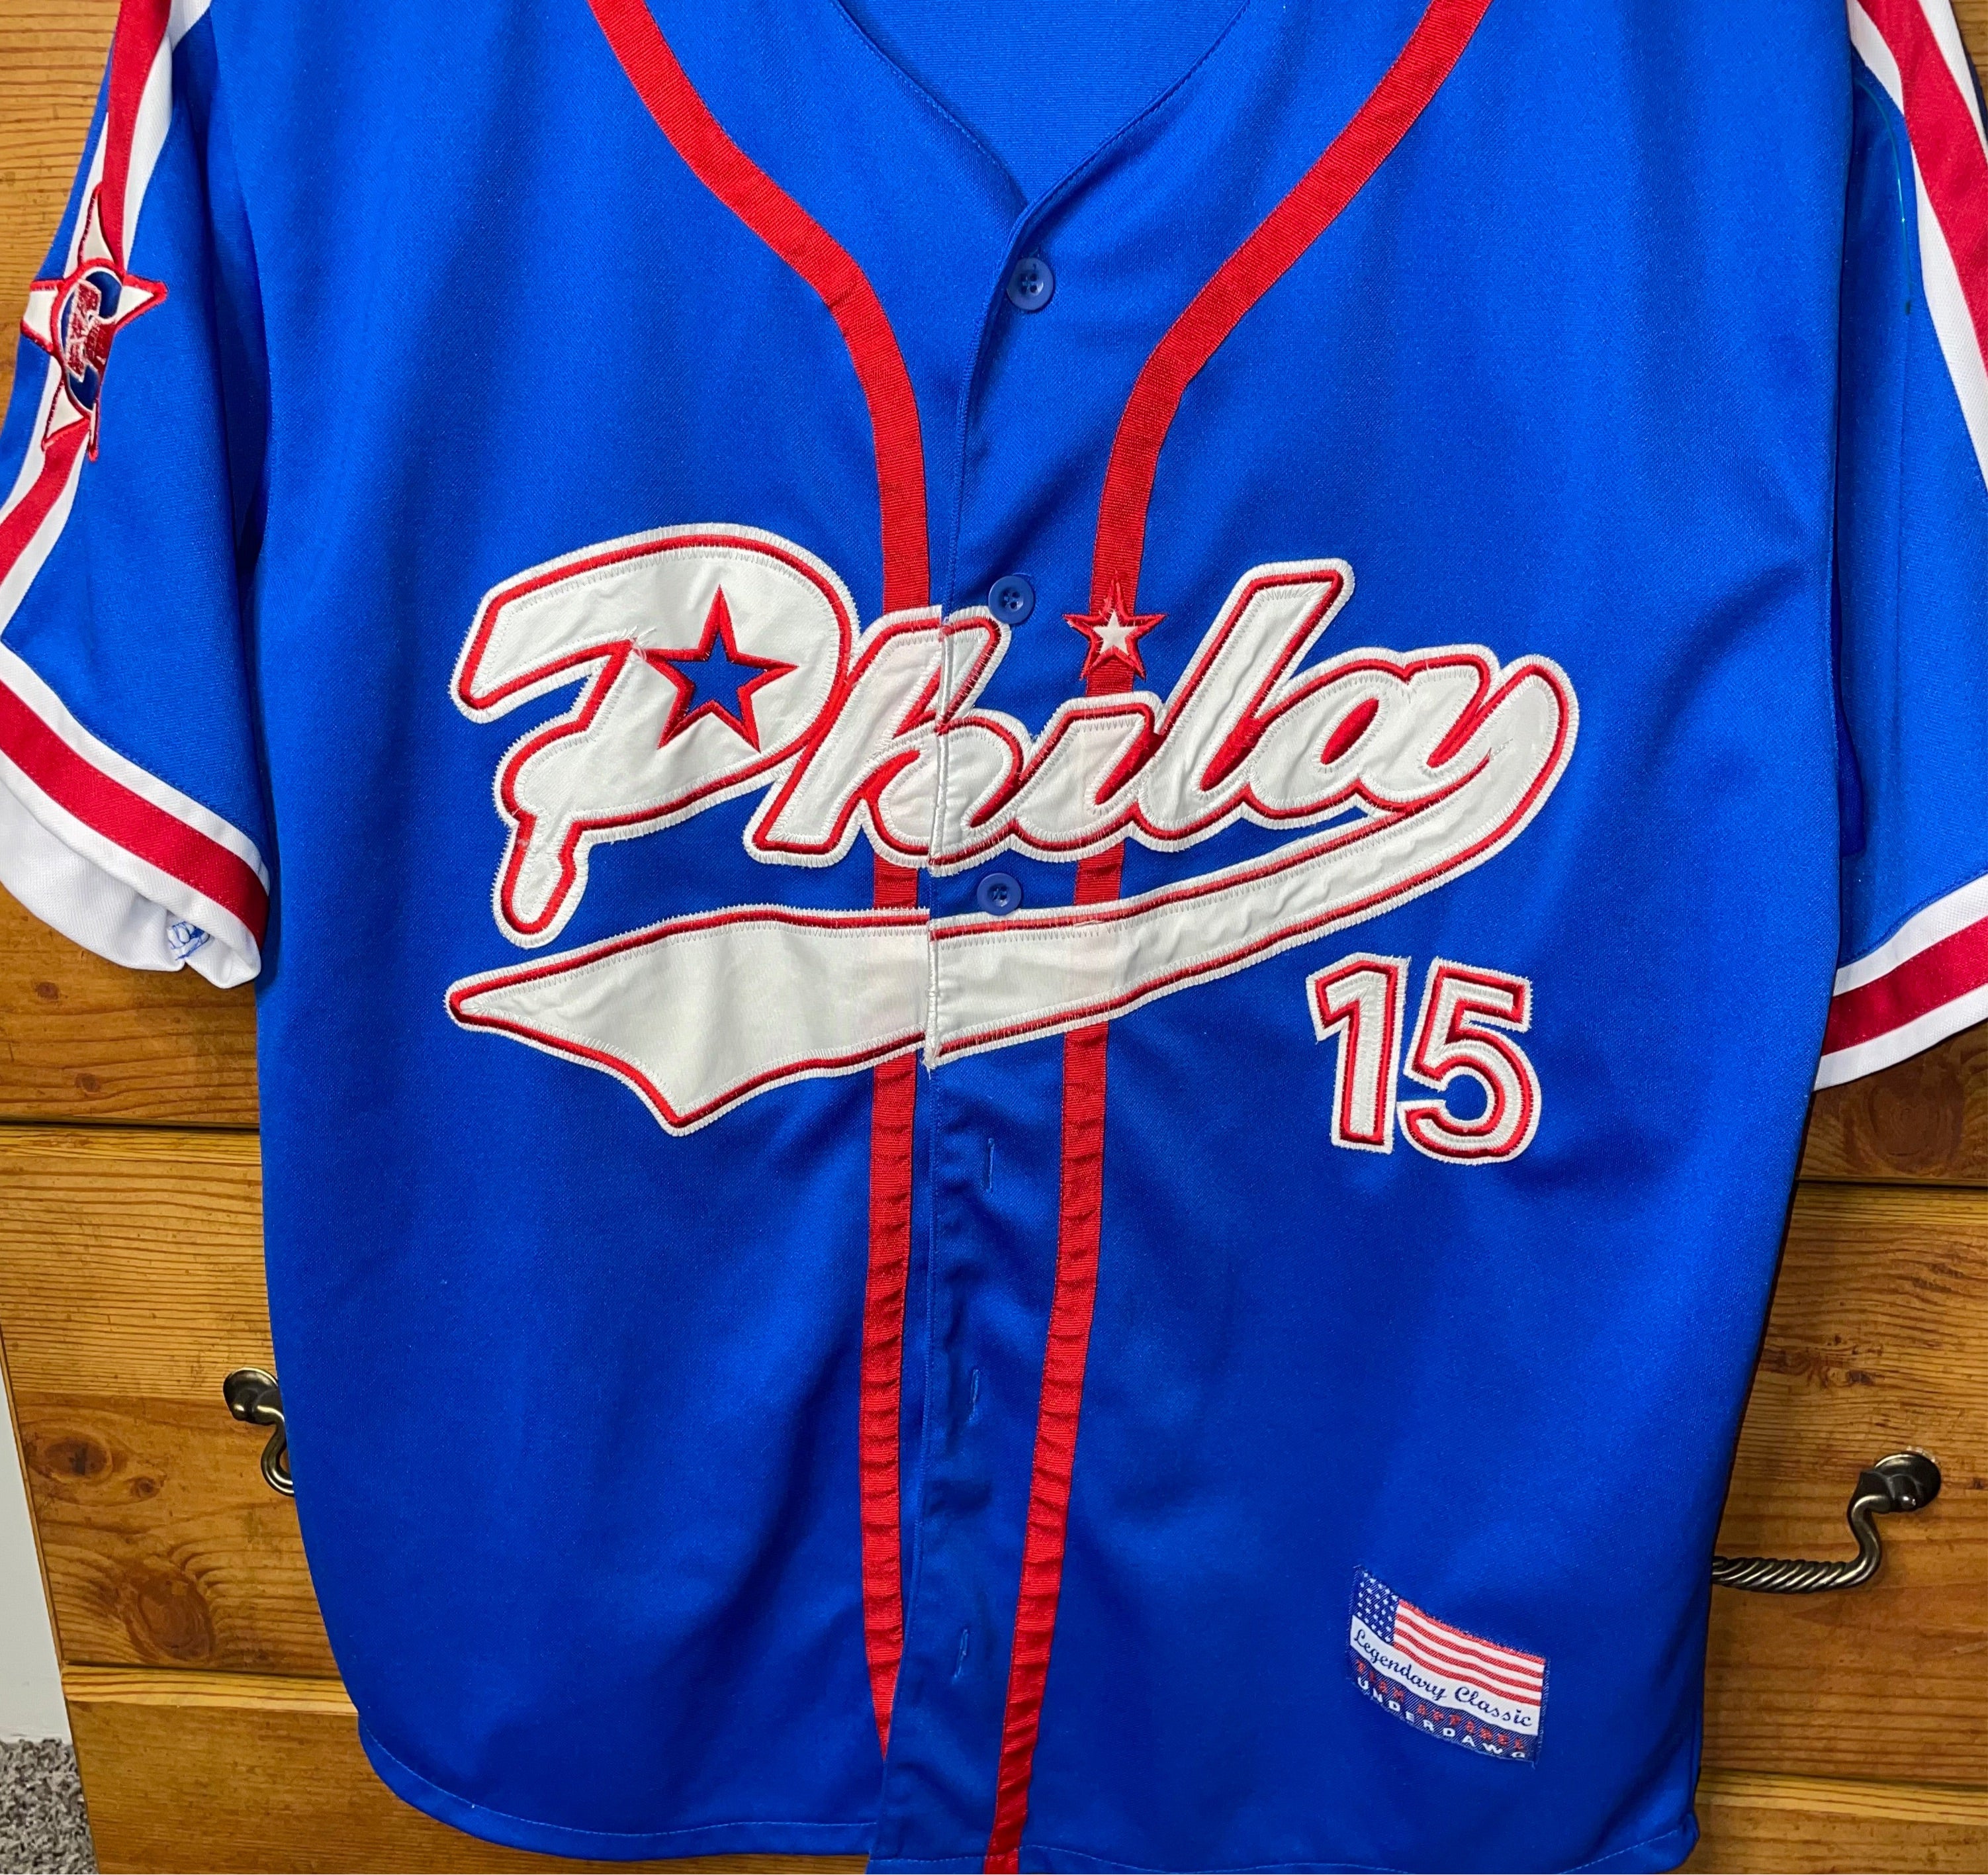 Legendary classic Phillies jersey